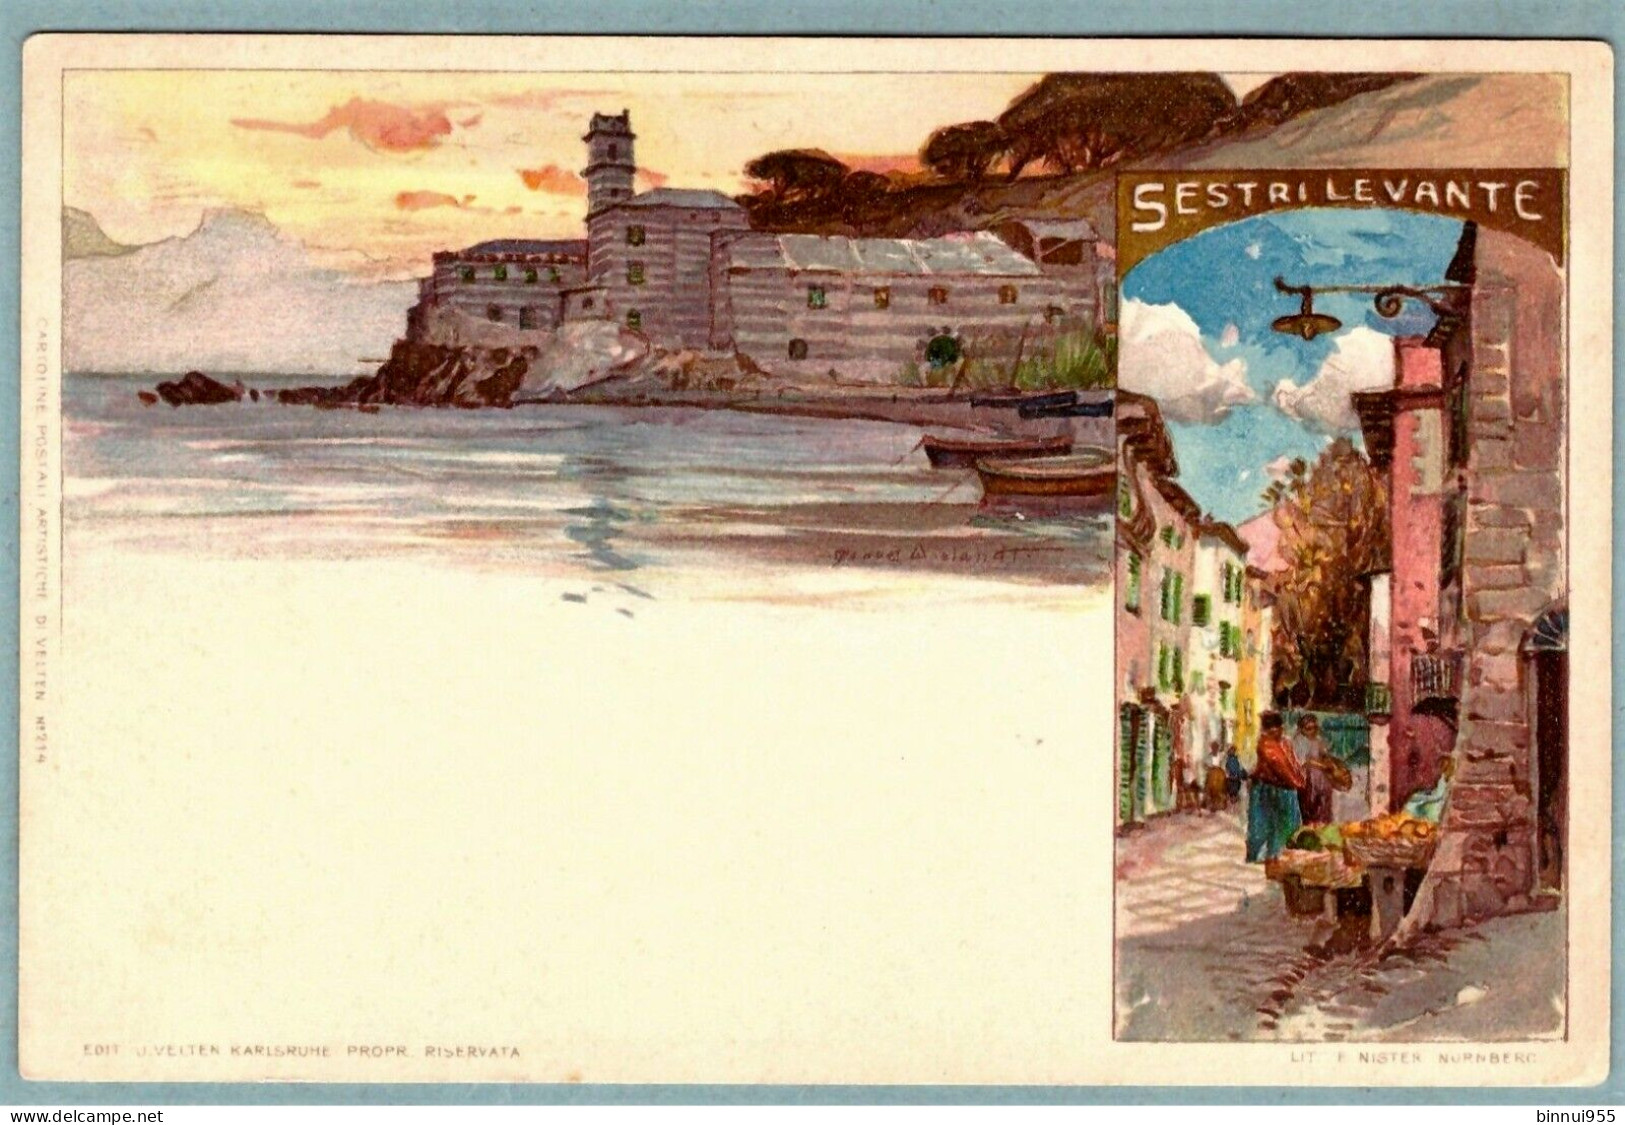 Cartolina Illustrata Genova Sestri Levante - Non Viaggiata - Genova (Genoa)